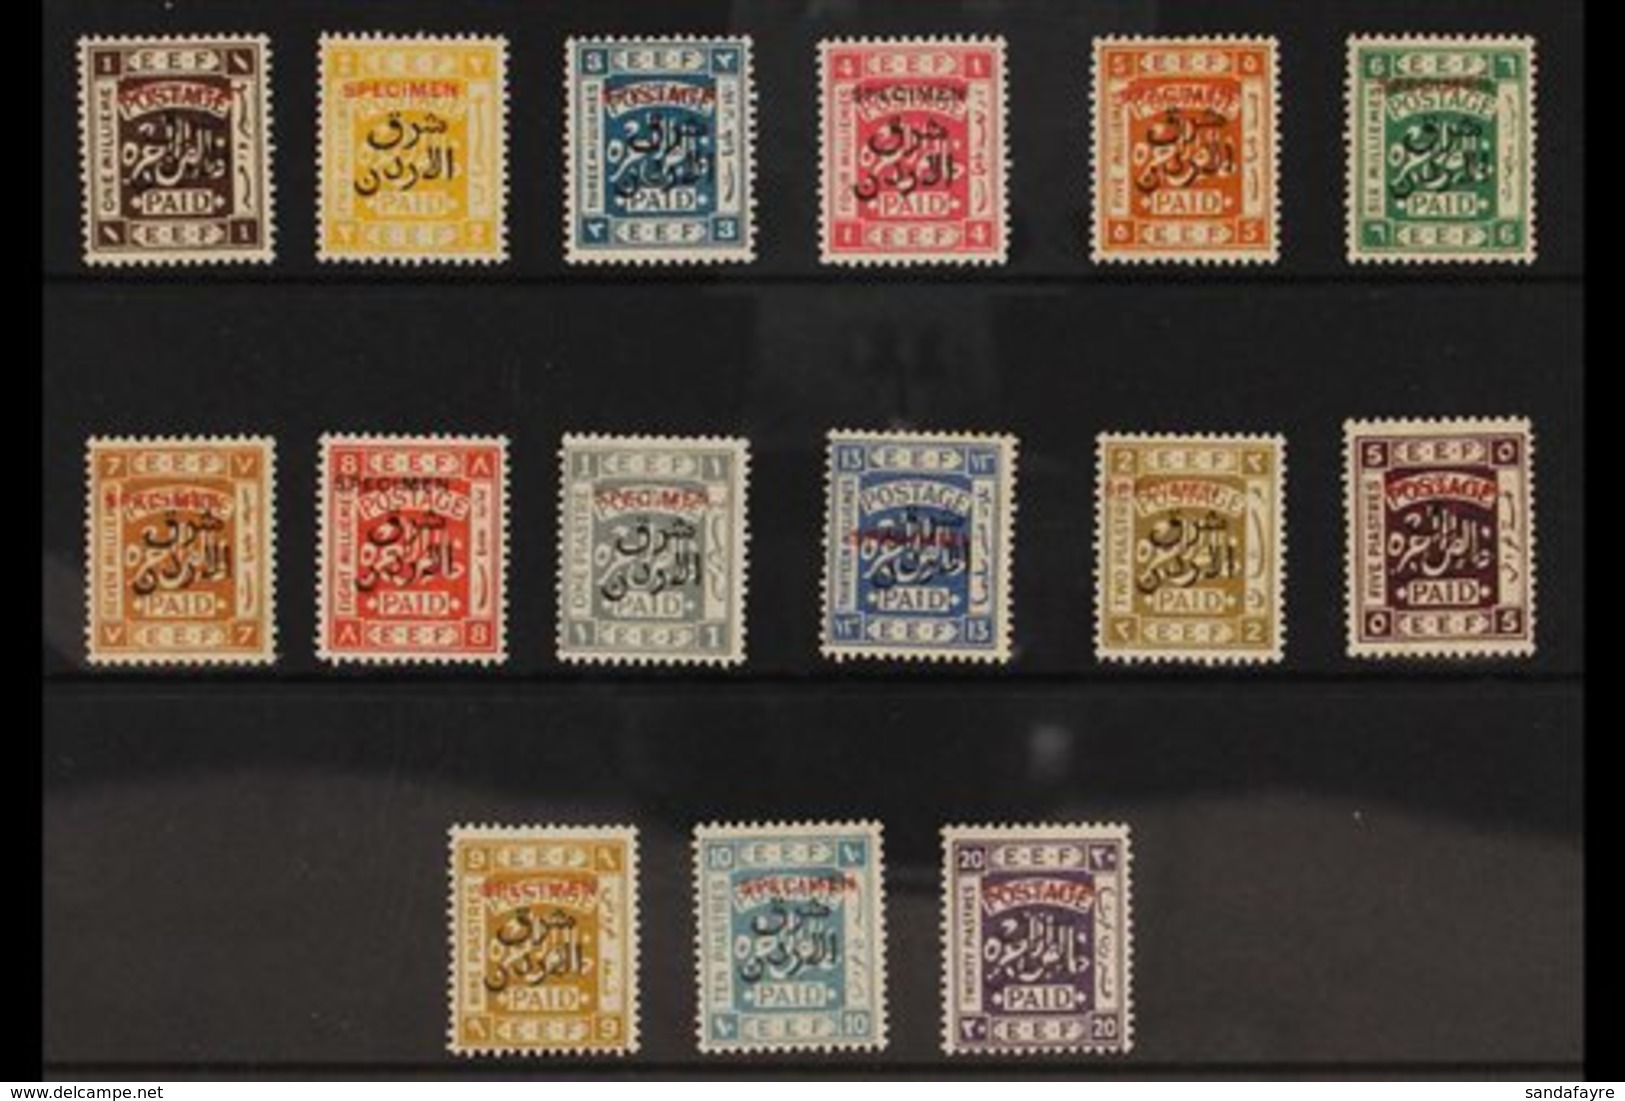 1925-26 "East Of The Jordan" Overprints On Palestine Overprinted "SPECIMEN" Complete Set, SG 143s/57s, Fine Mint, Fresh  - Jordan